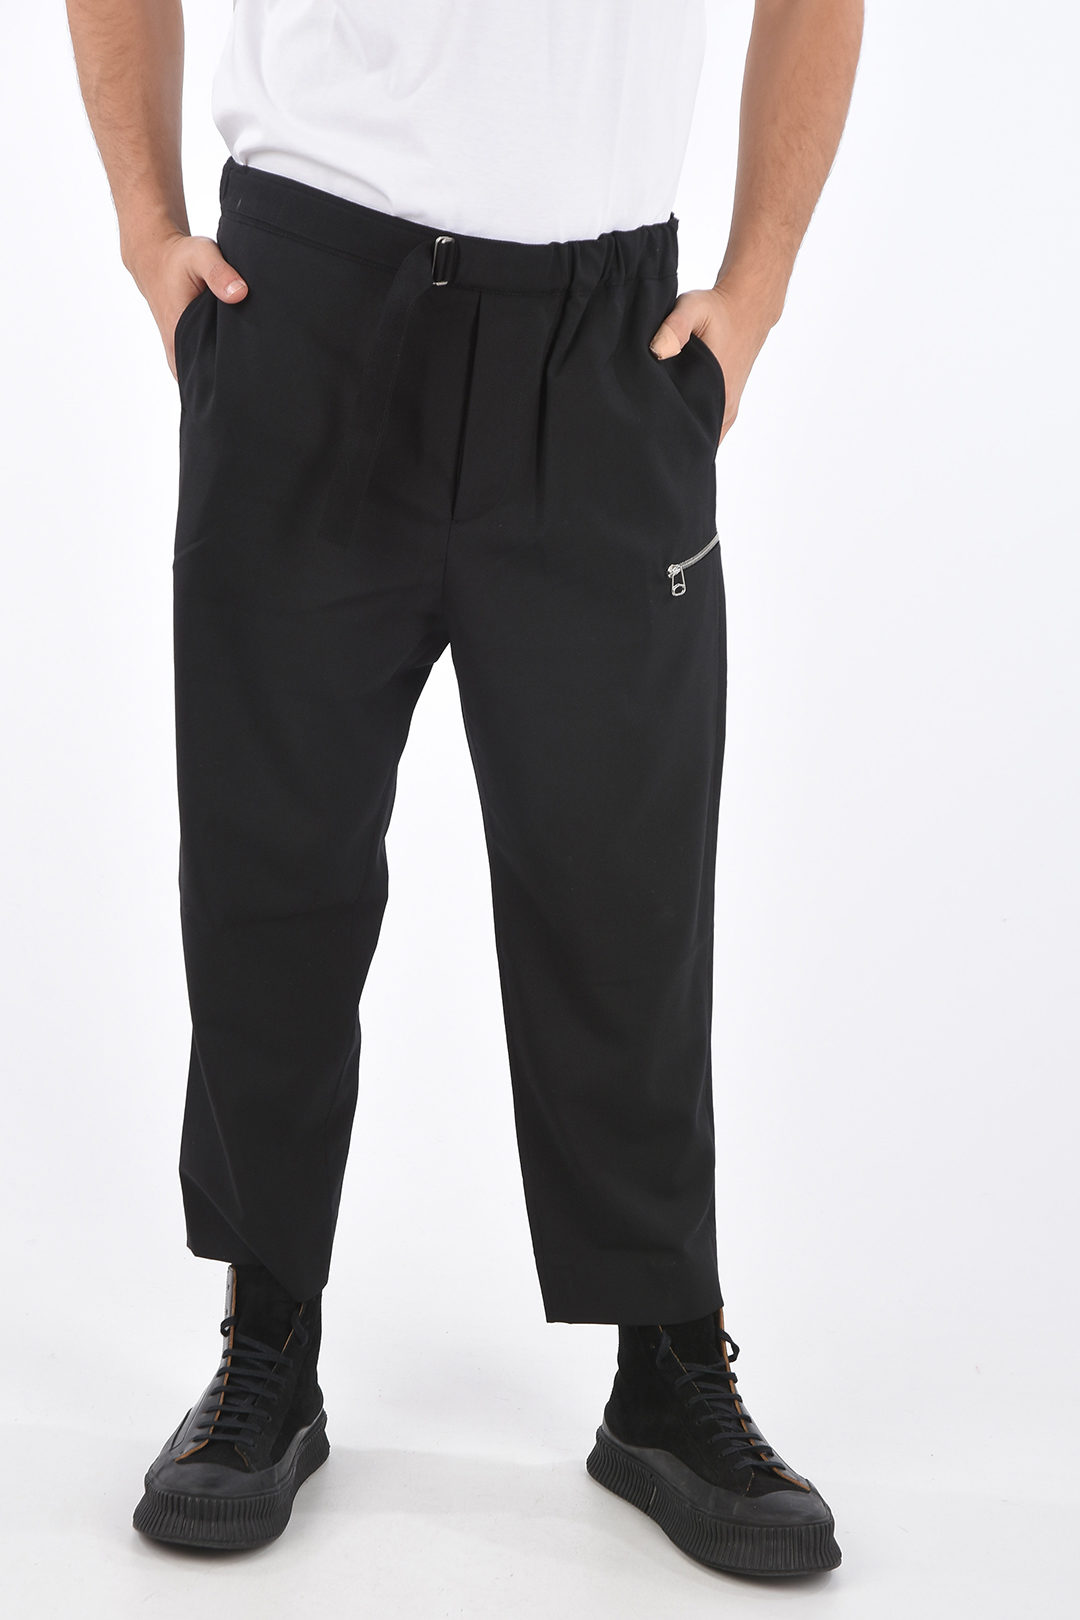 OAMC Drop Crotch Pants with Belt men - Glamood Outlet